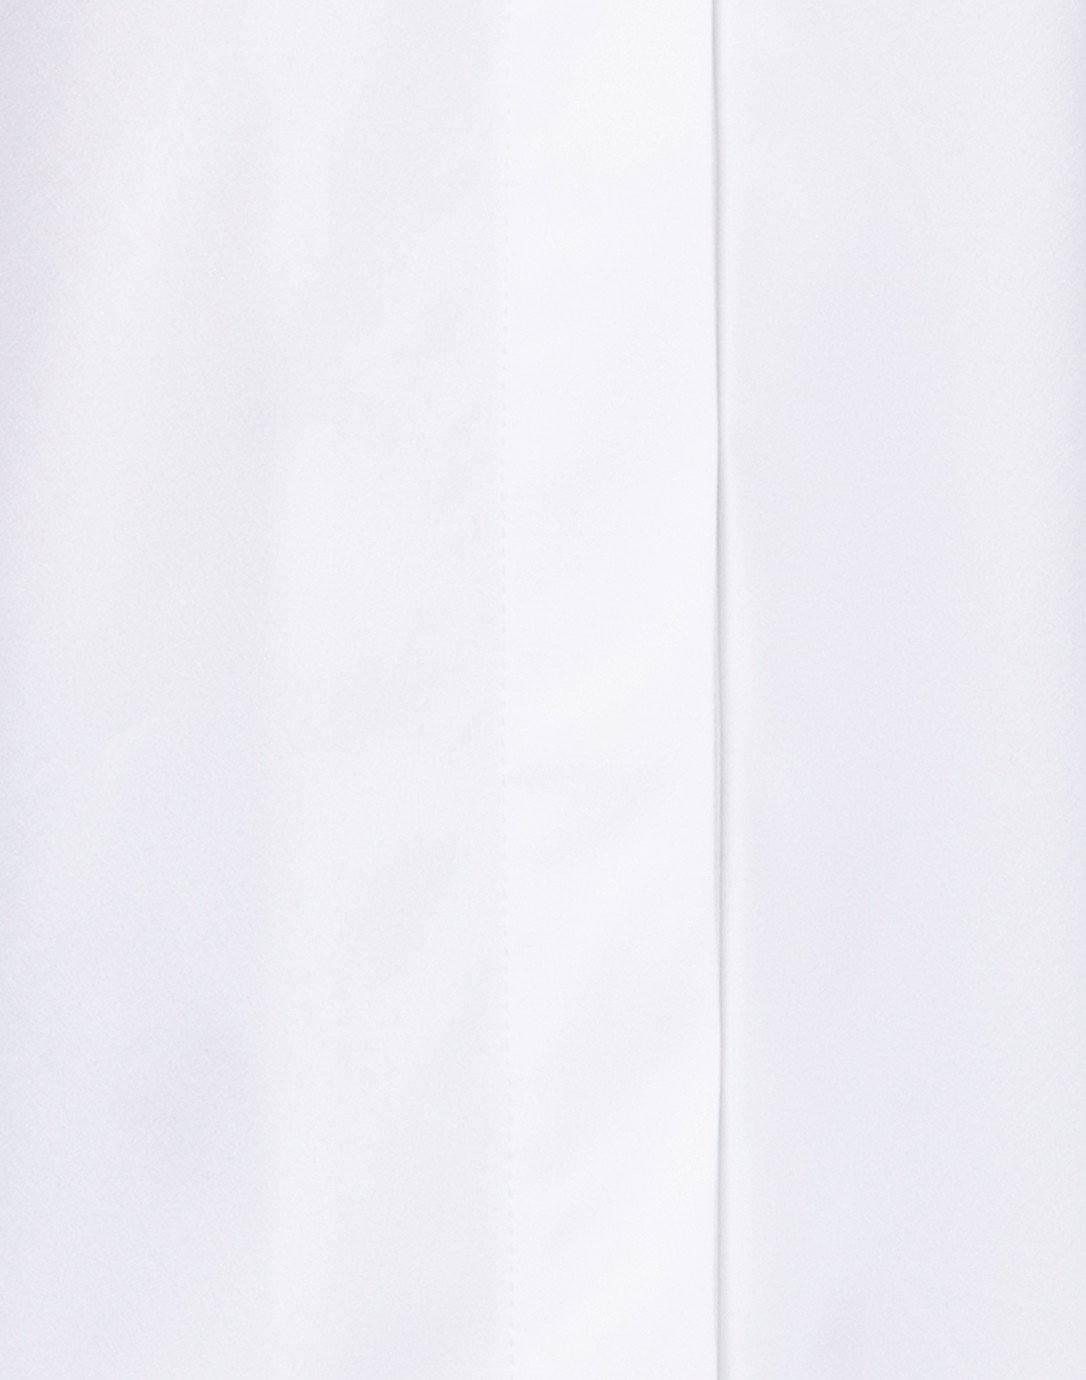 Betty White Short Sleeve Button Down Stretch Cotton Shirt | Hinson Wu